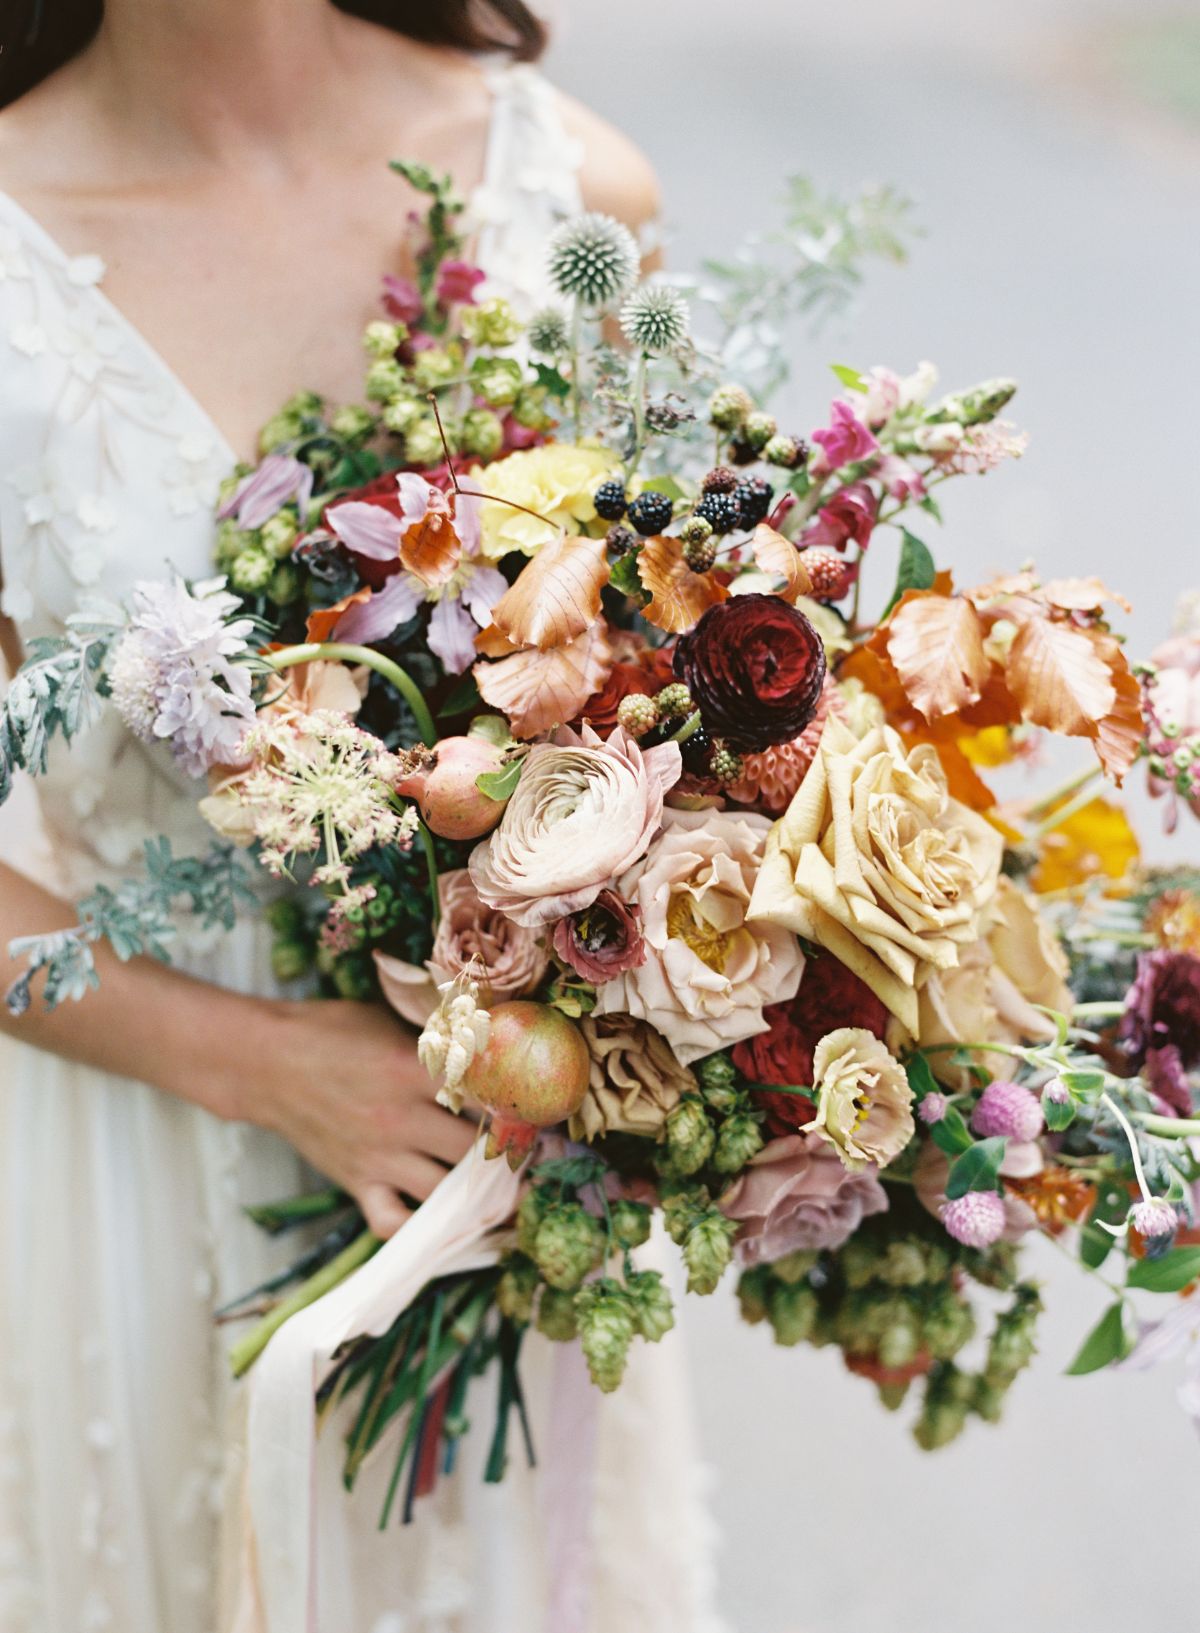 wildflower wedding boquet with berries